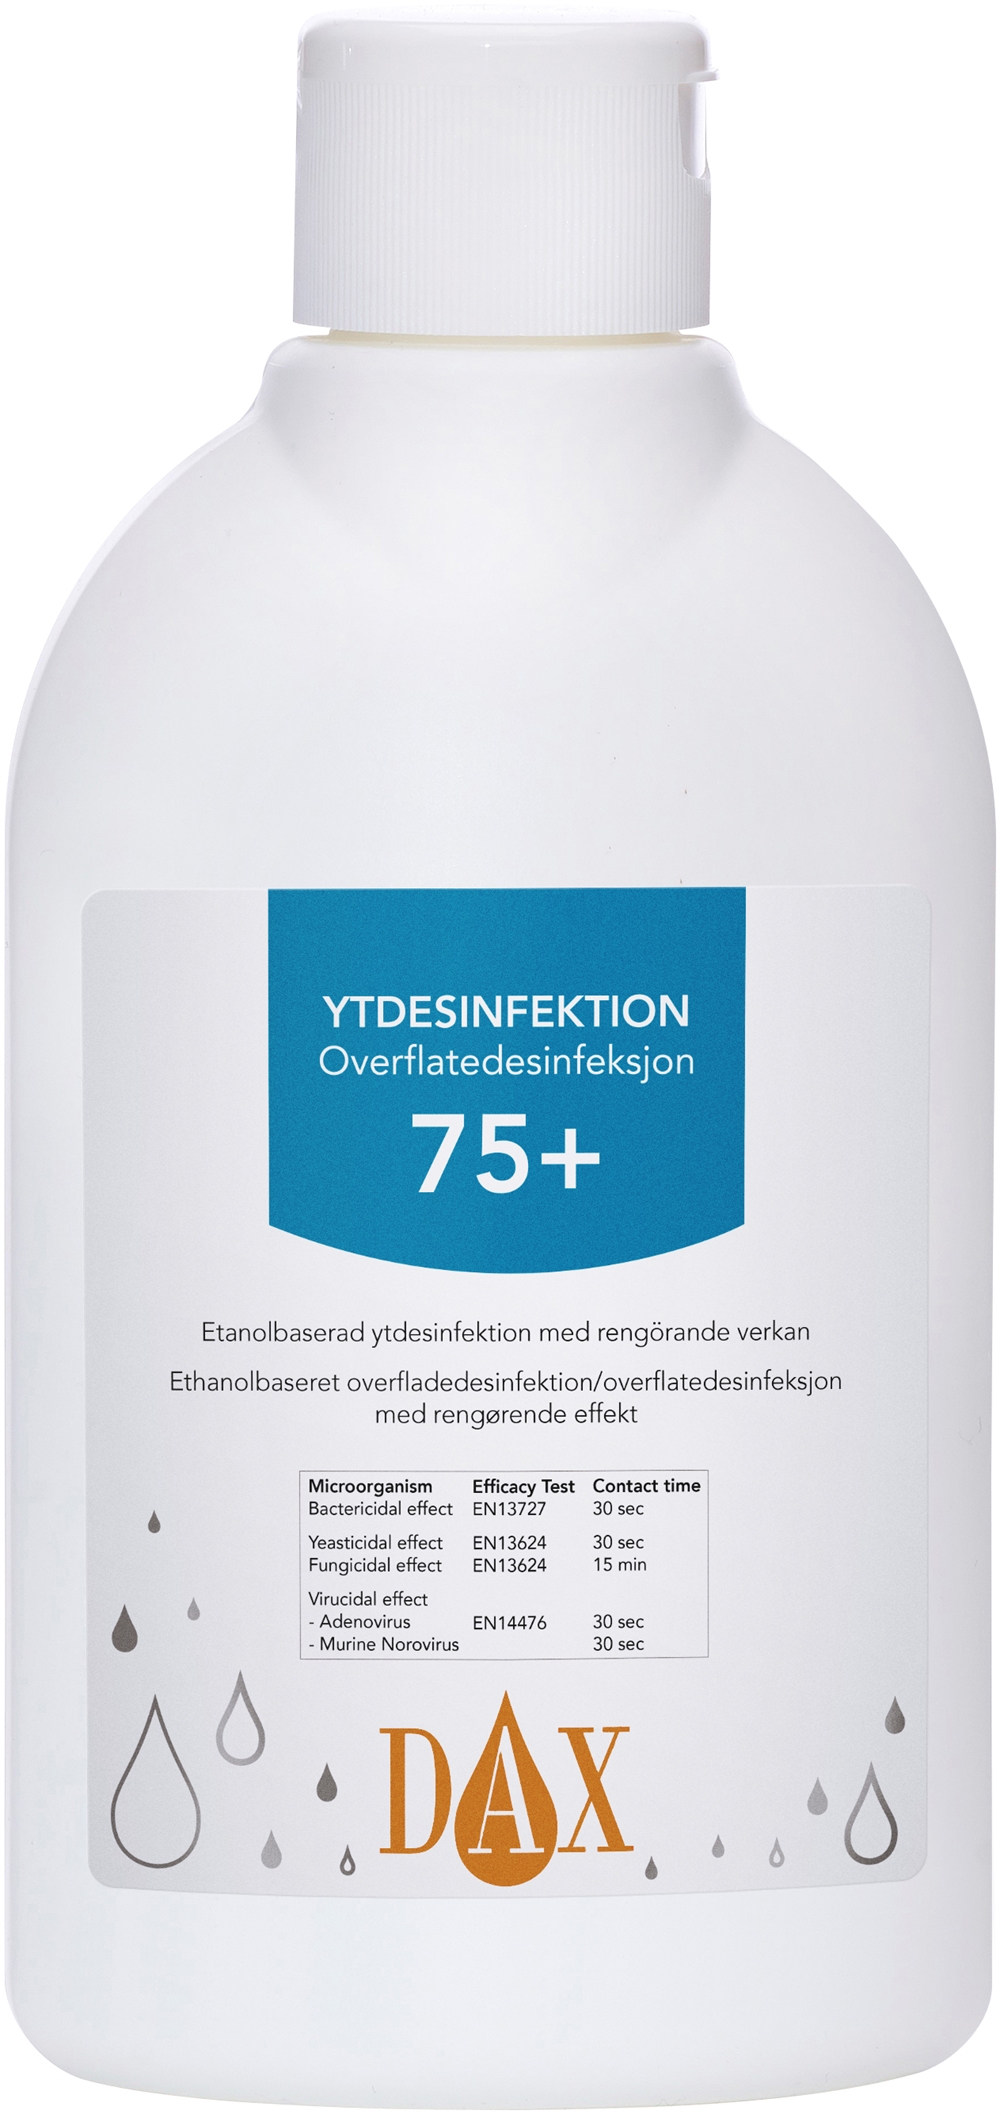 Ytdesinfektion DAX 75+ etanol - 300ml med tensid